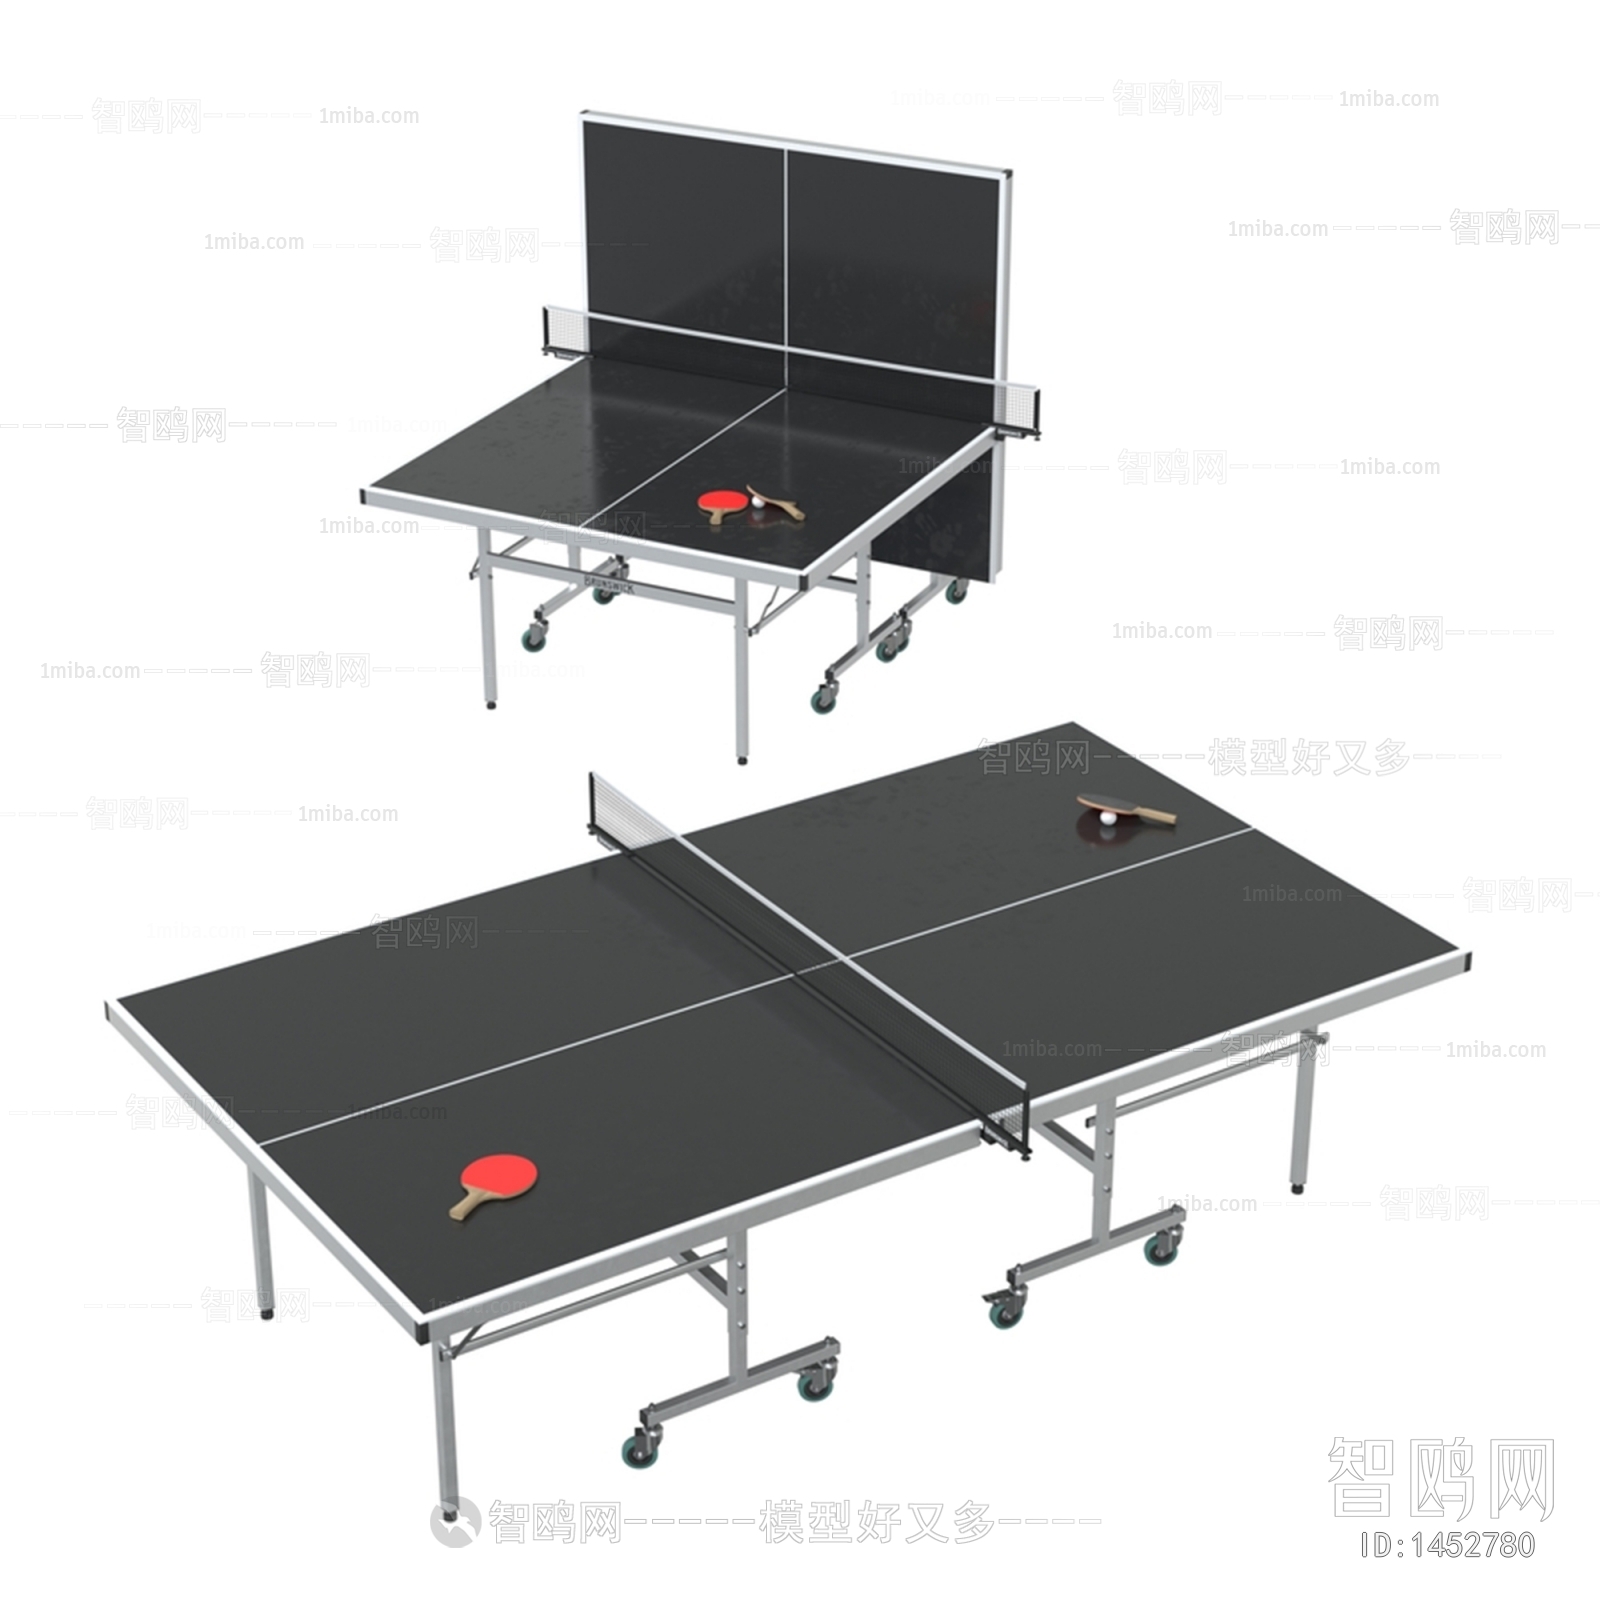 Modern Table-tennis Table